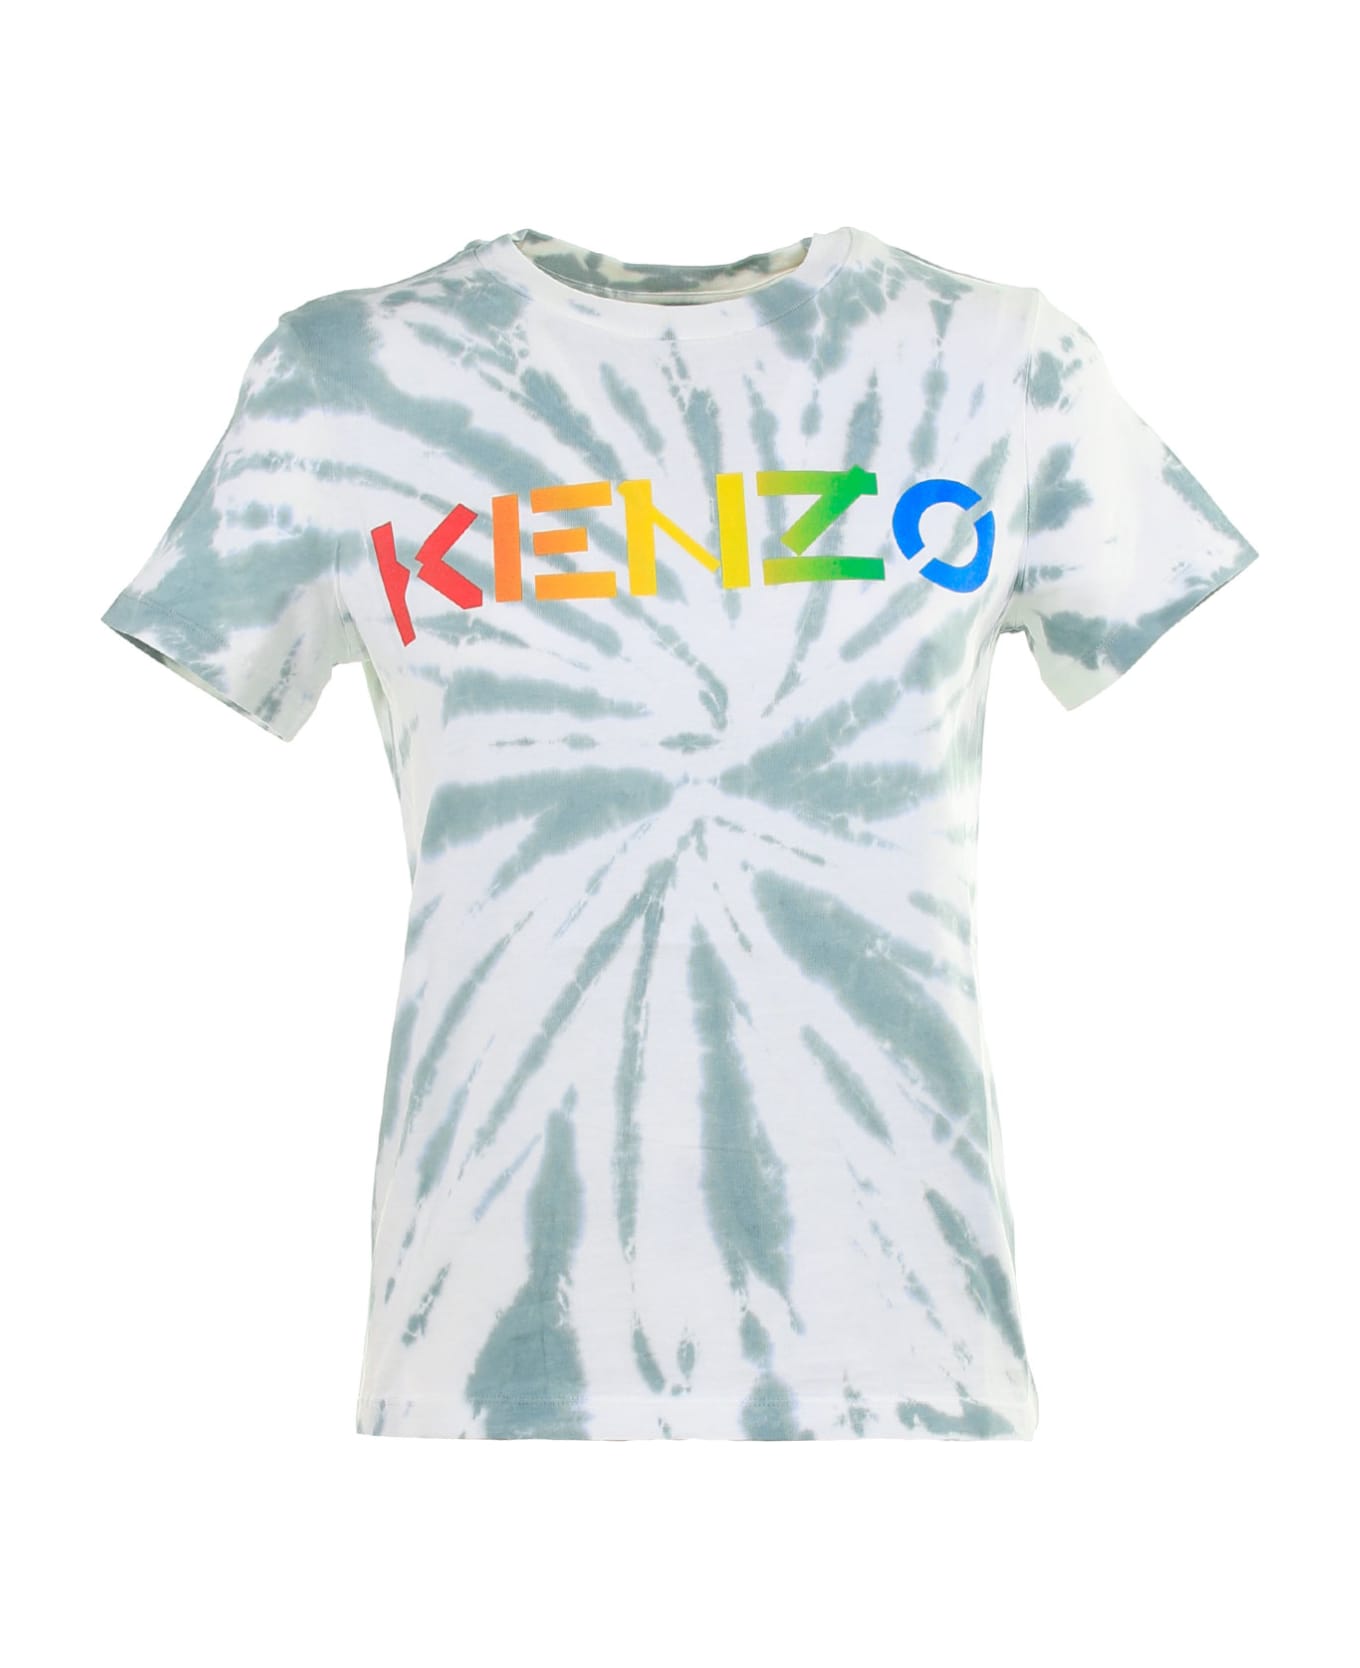 Kenzo T-Shirt - MINT Tシャツ